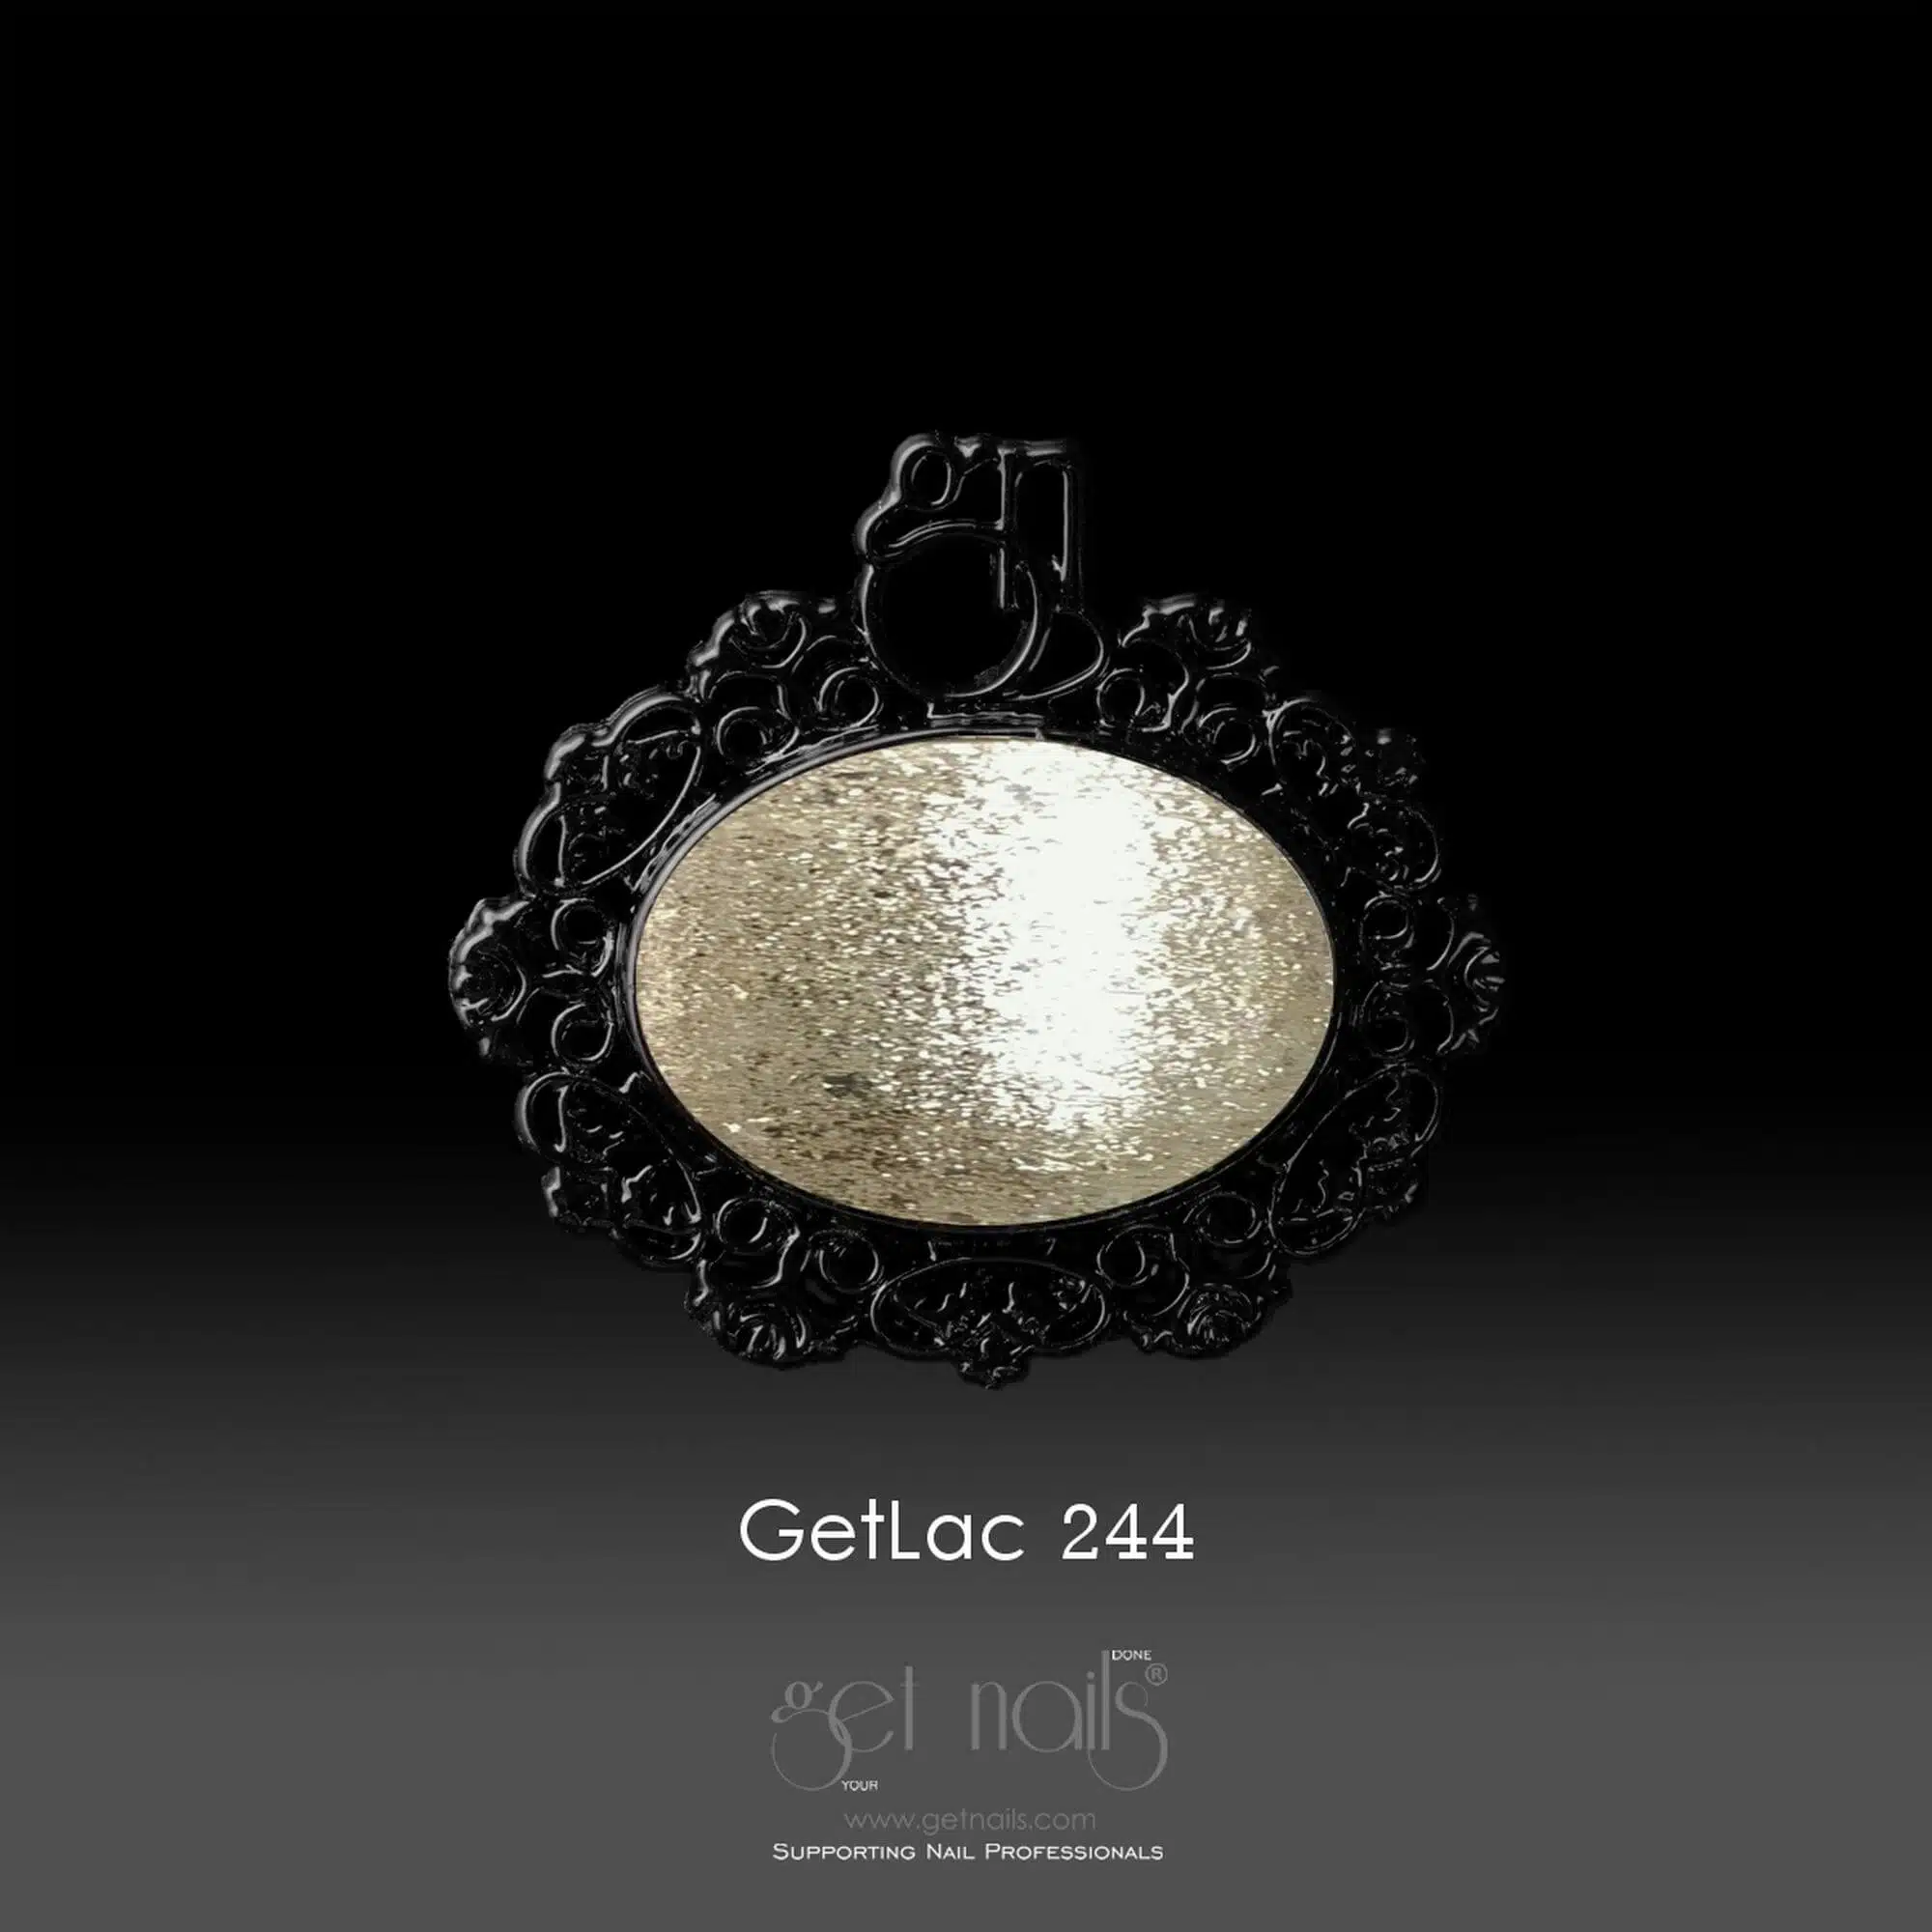 Get Nails Austria - GetLac 244 Brilliant Soft Gold 15 g